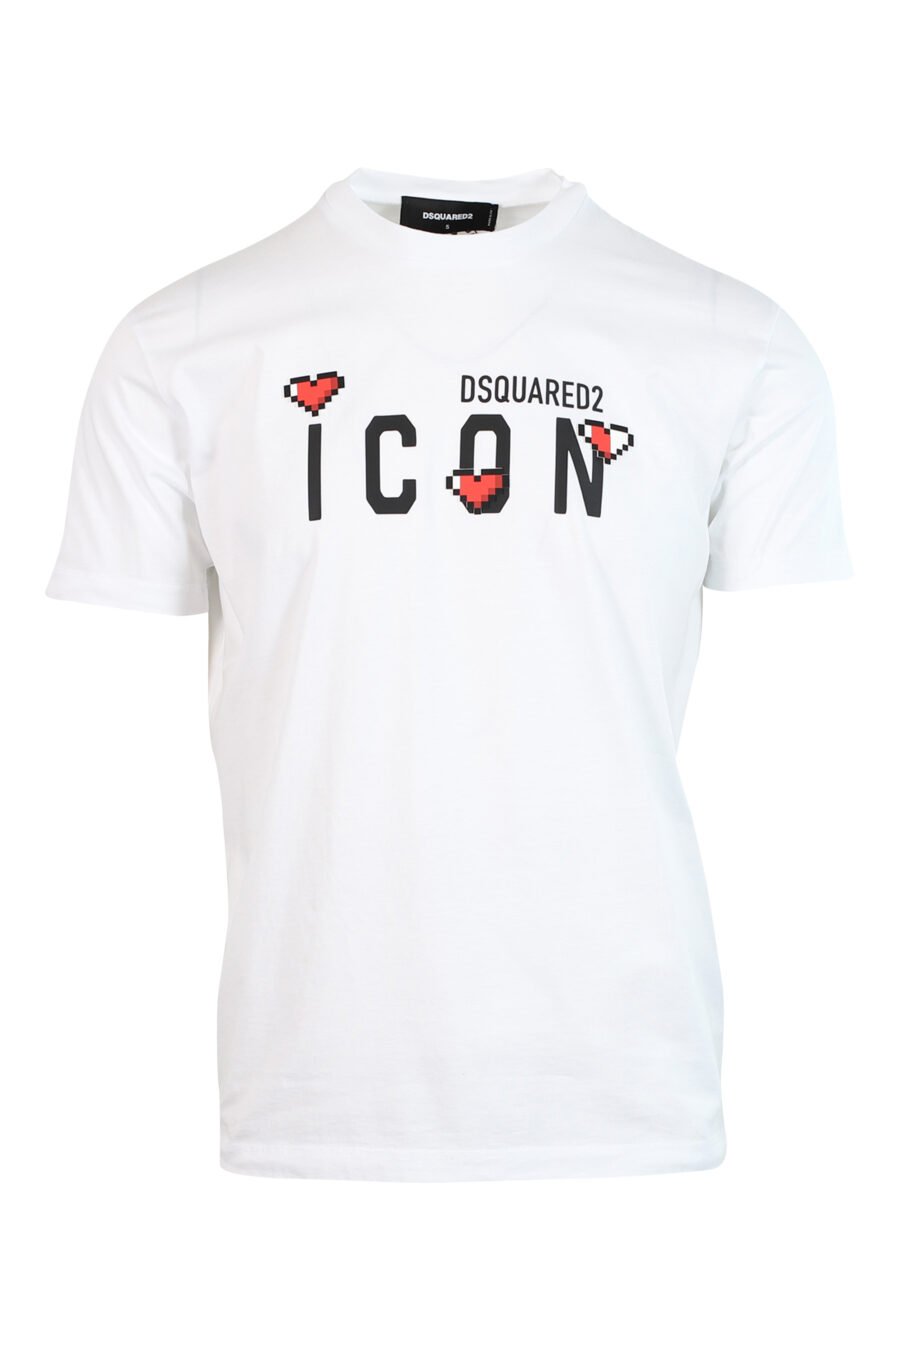 T-shirt blanc avec maxilogo "icône cœur pixel" - 8052134980842